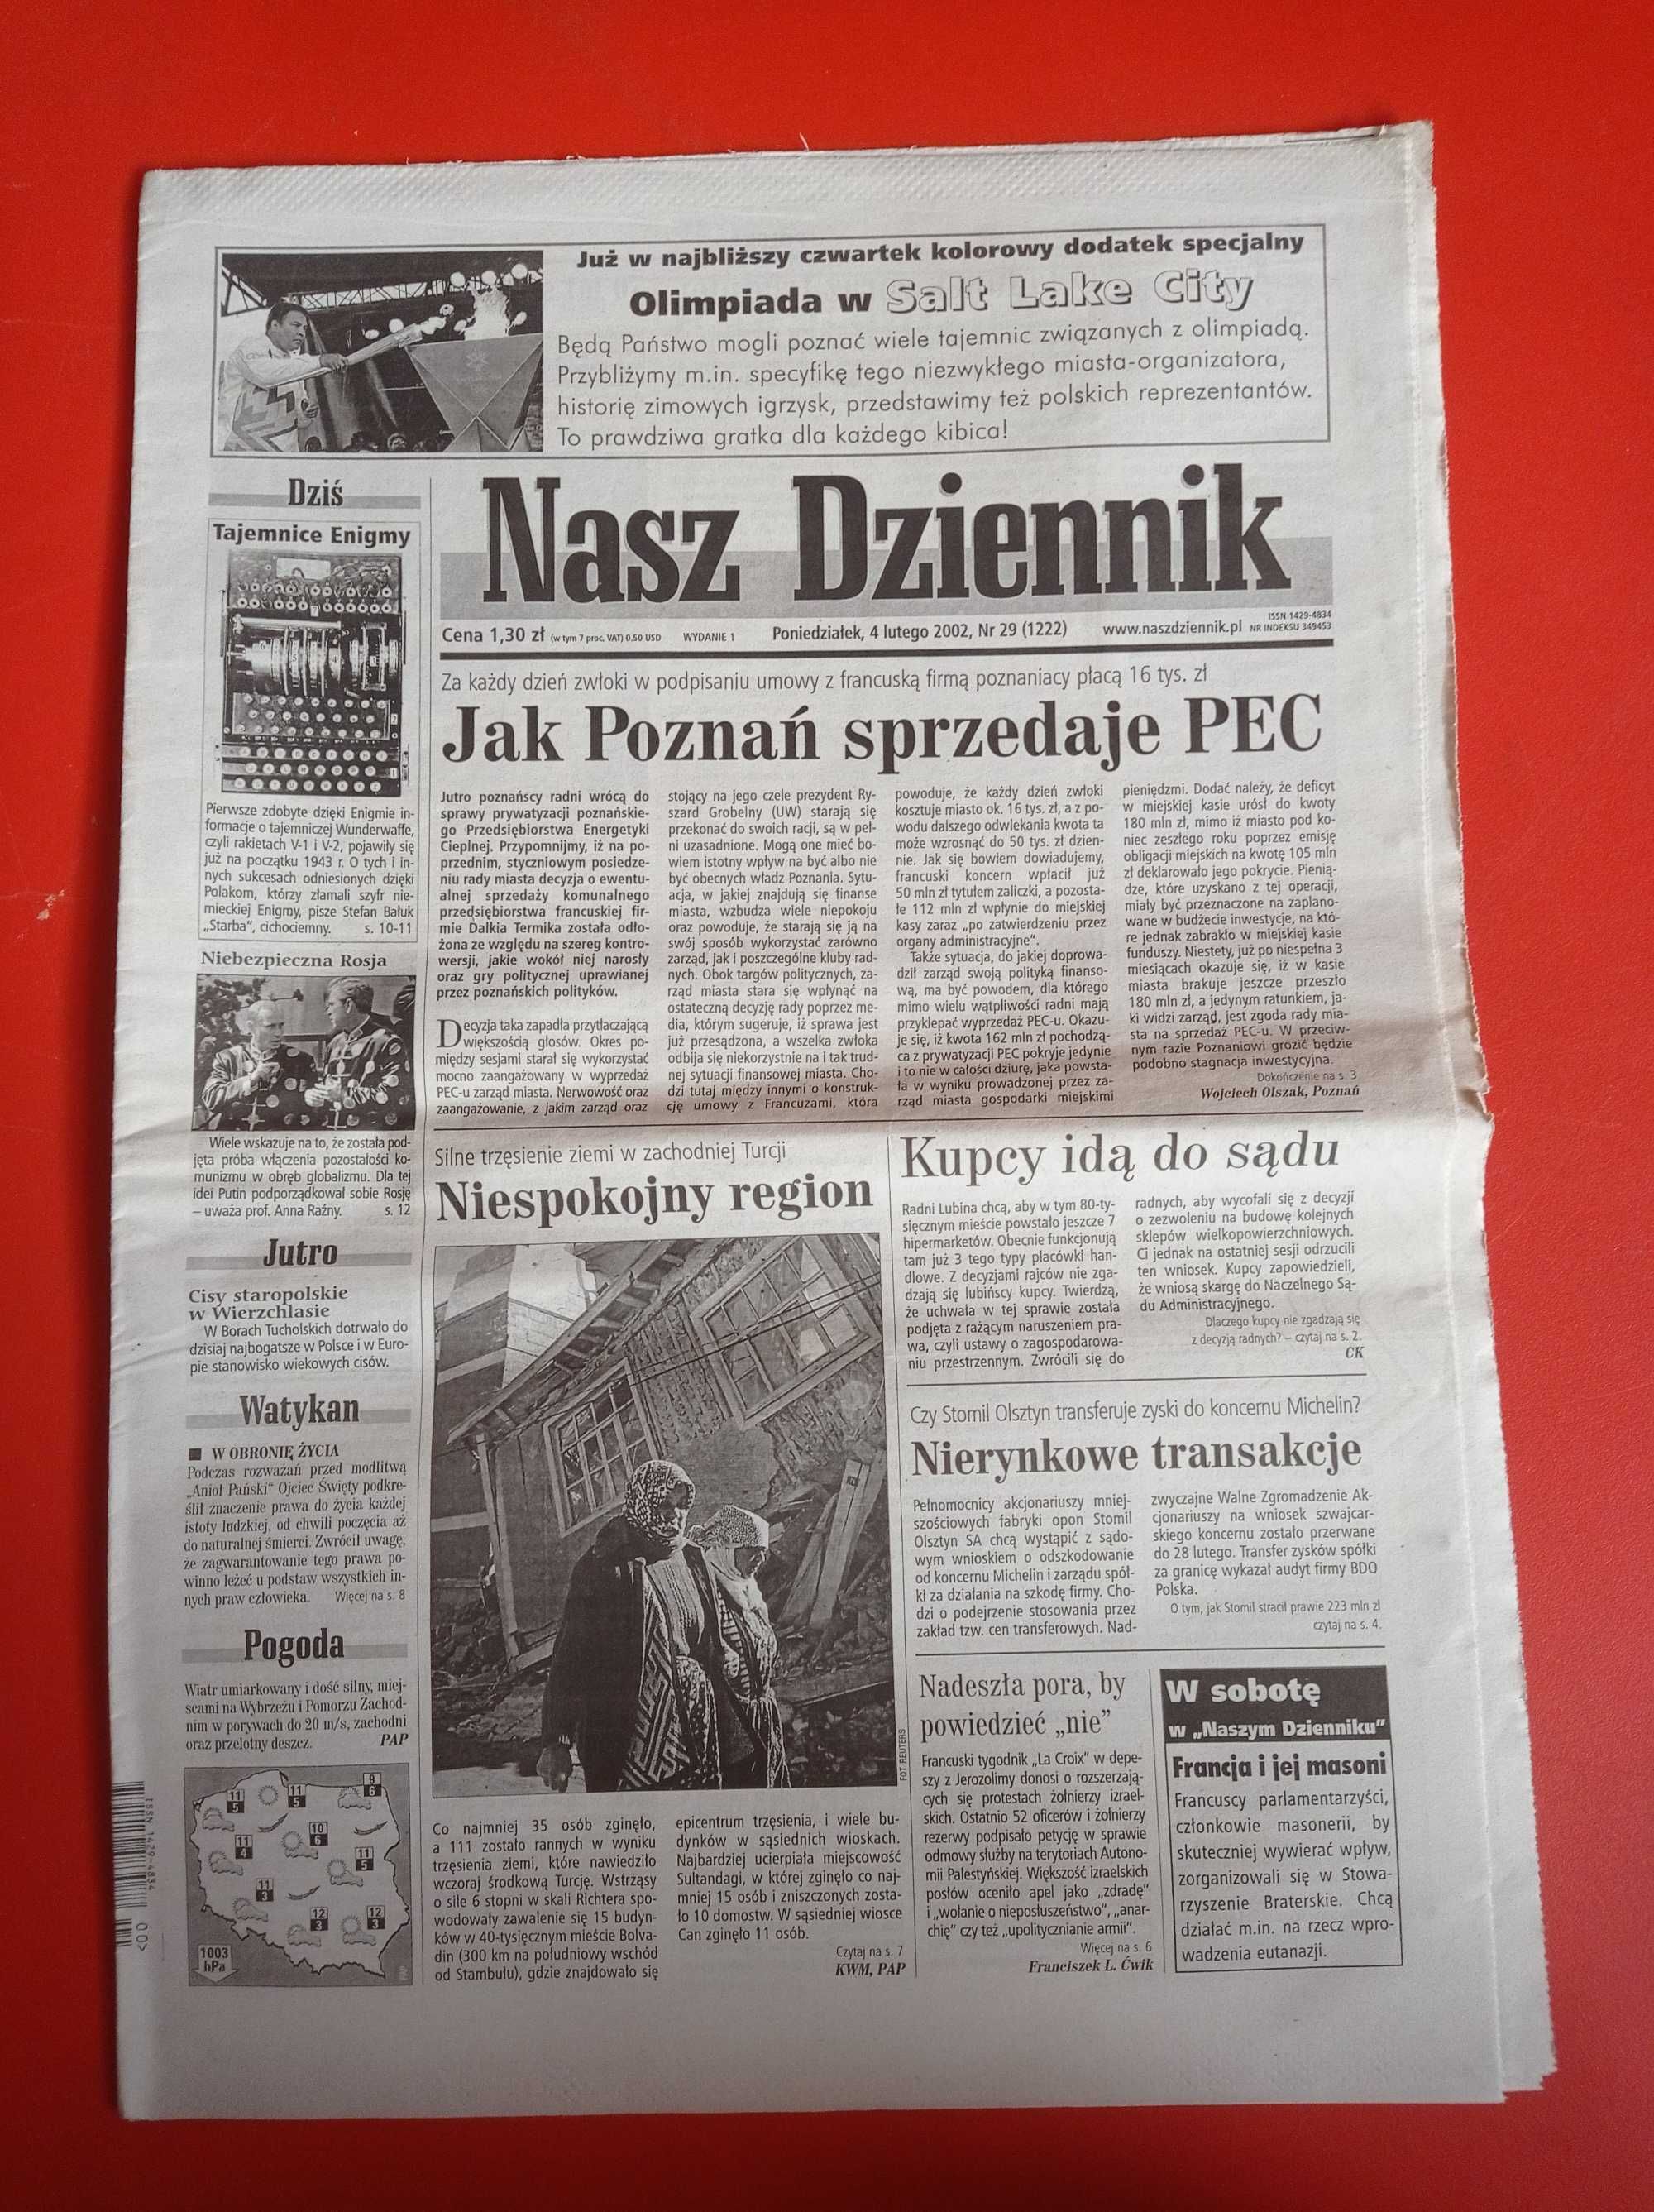 Nasz Dziennik, nr 29/2002, 4 lutego 2002